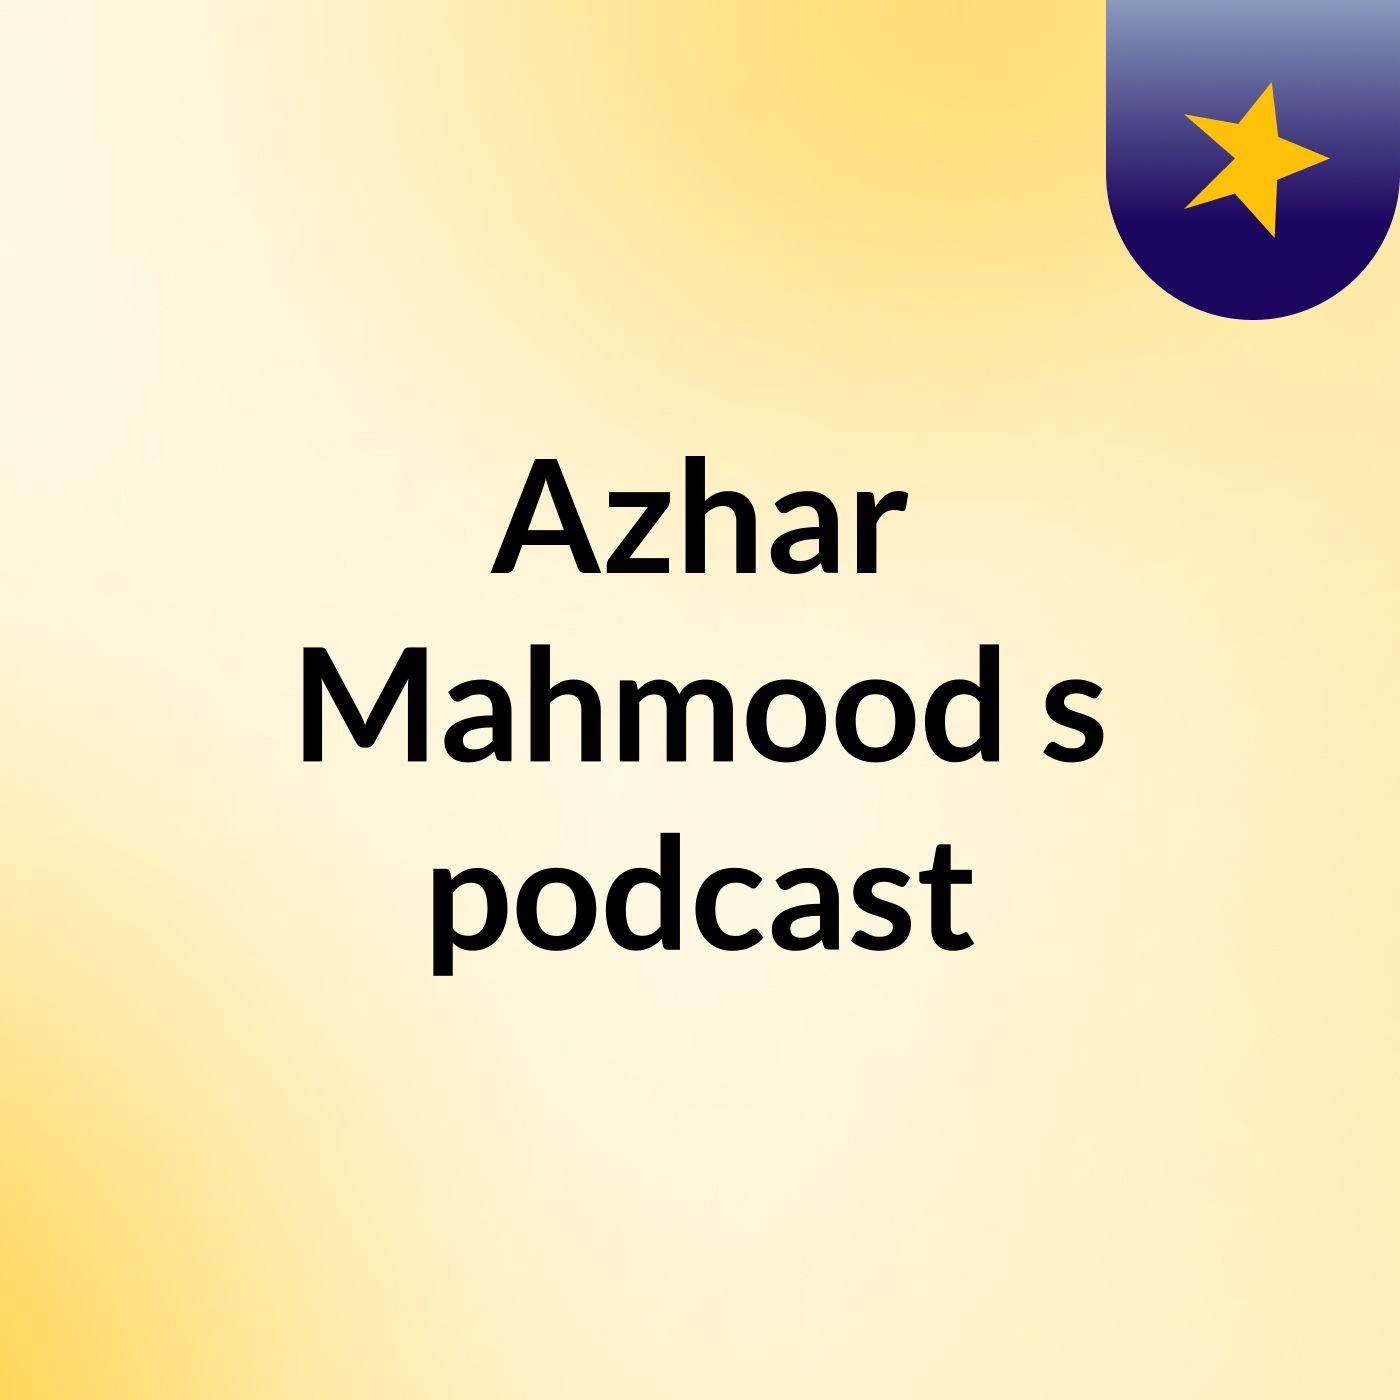 Episode 3 - Azhar Mahmood's podcast